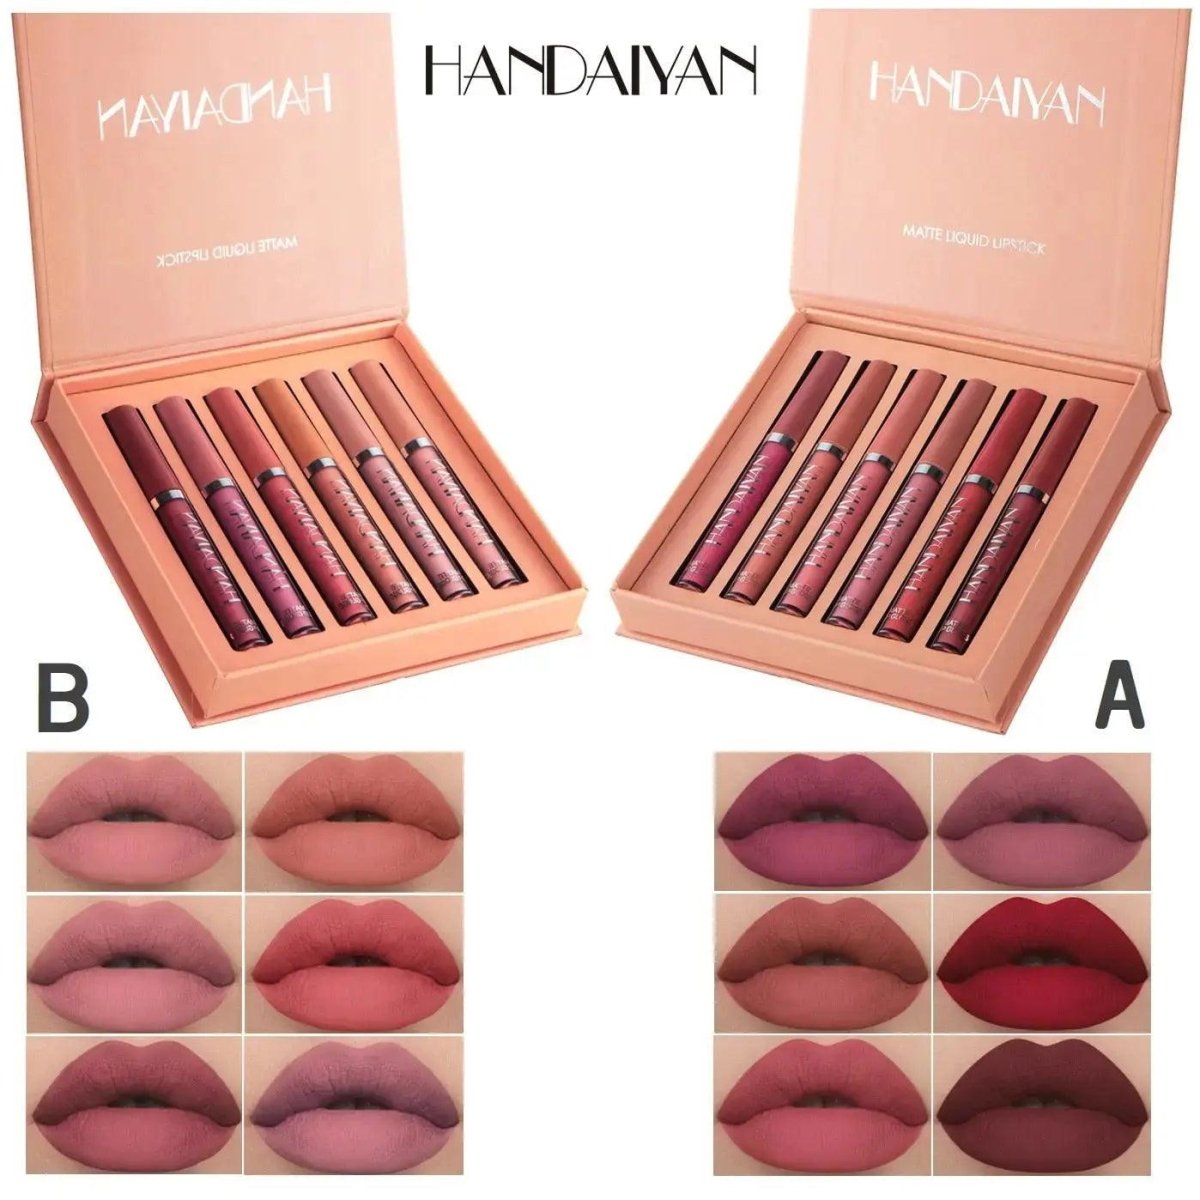 Kit 6 Batons Beauty Lip Handaiyan - 16h De Duração - LUV Mulher - MQ014 - Batom Beauty Lip - KIT Suaves+Intensas - -